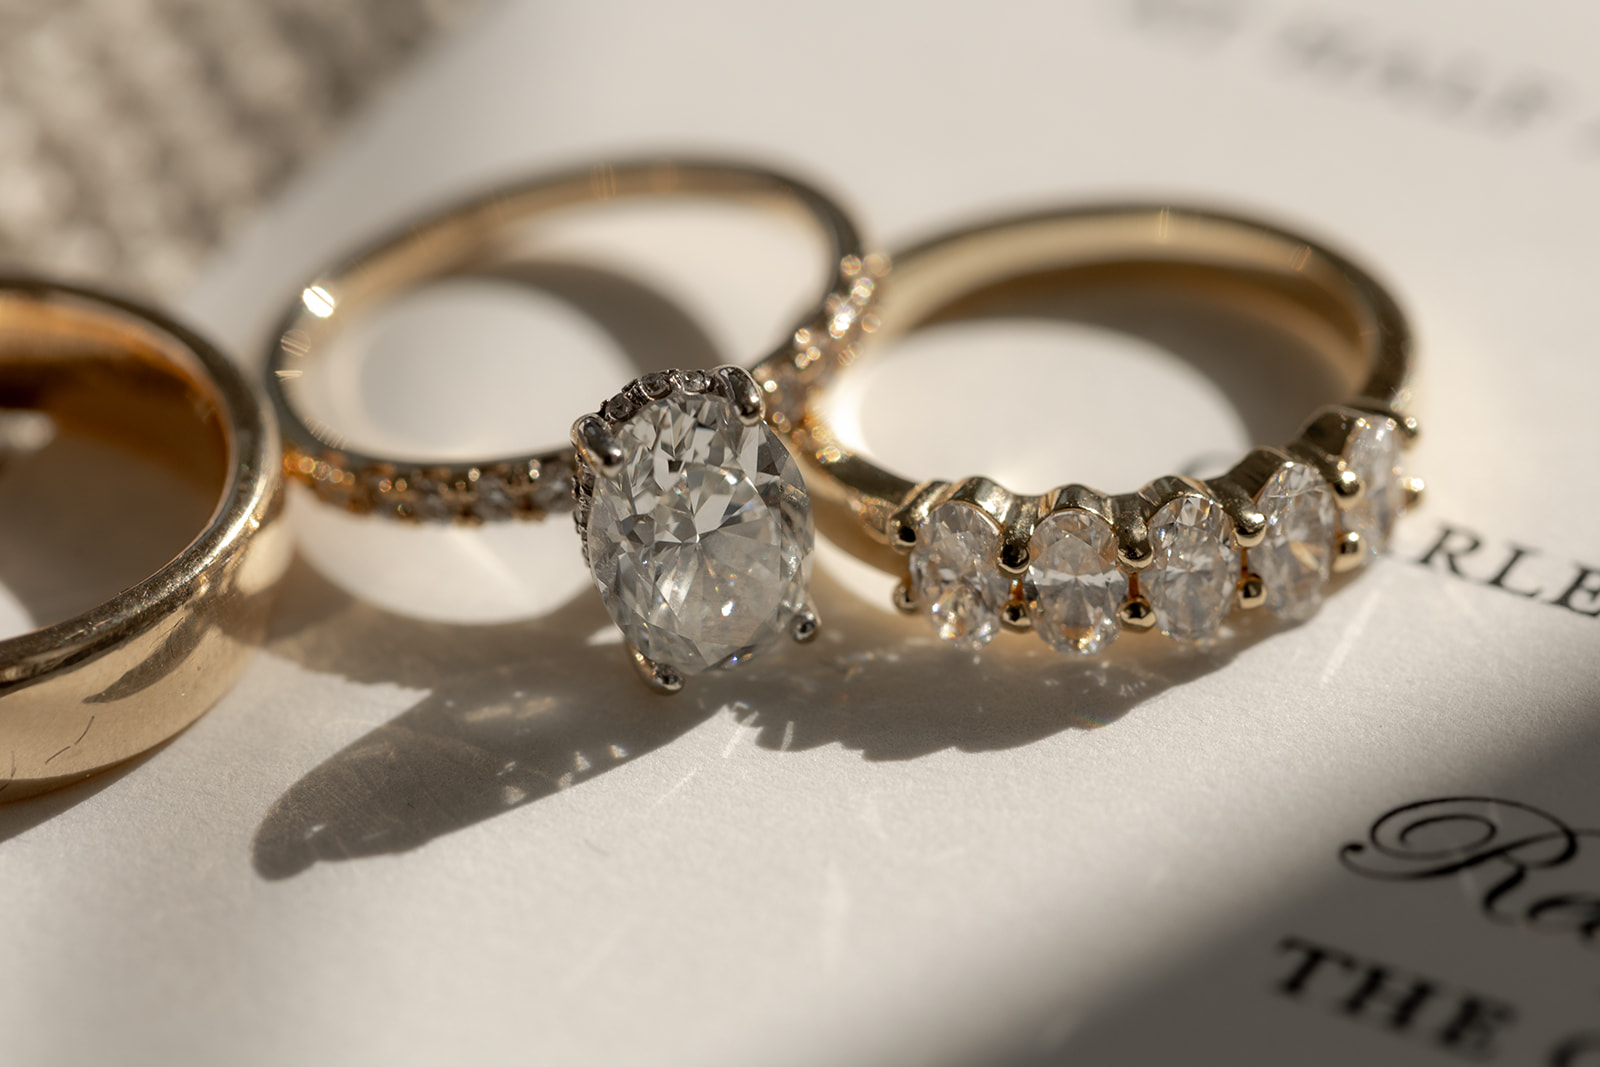 Detail photo of wedding rings